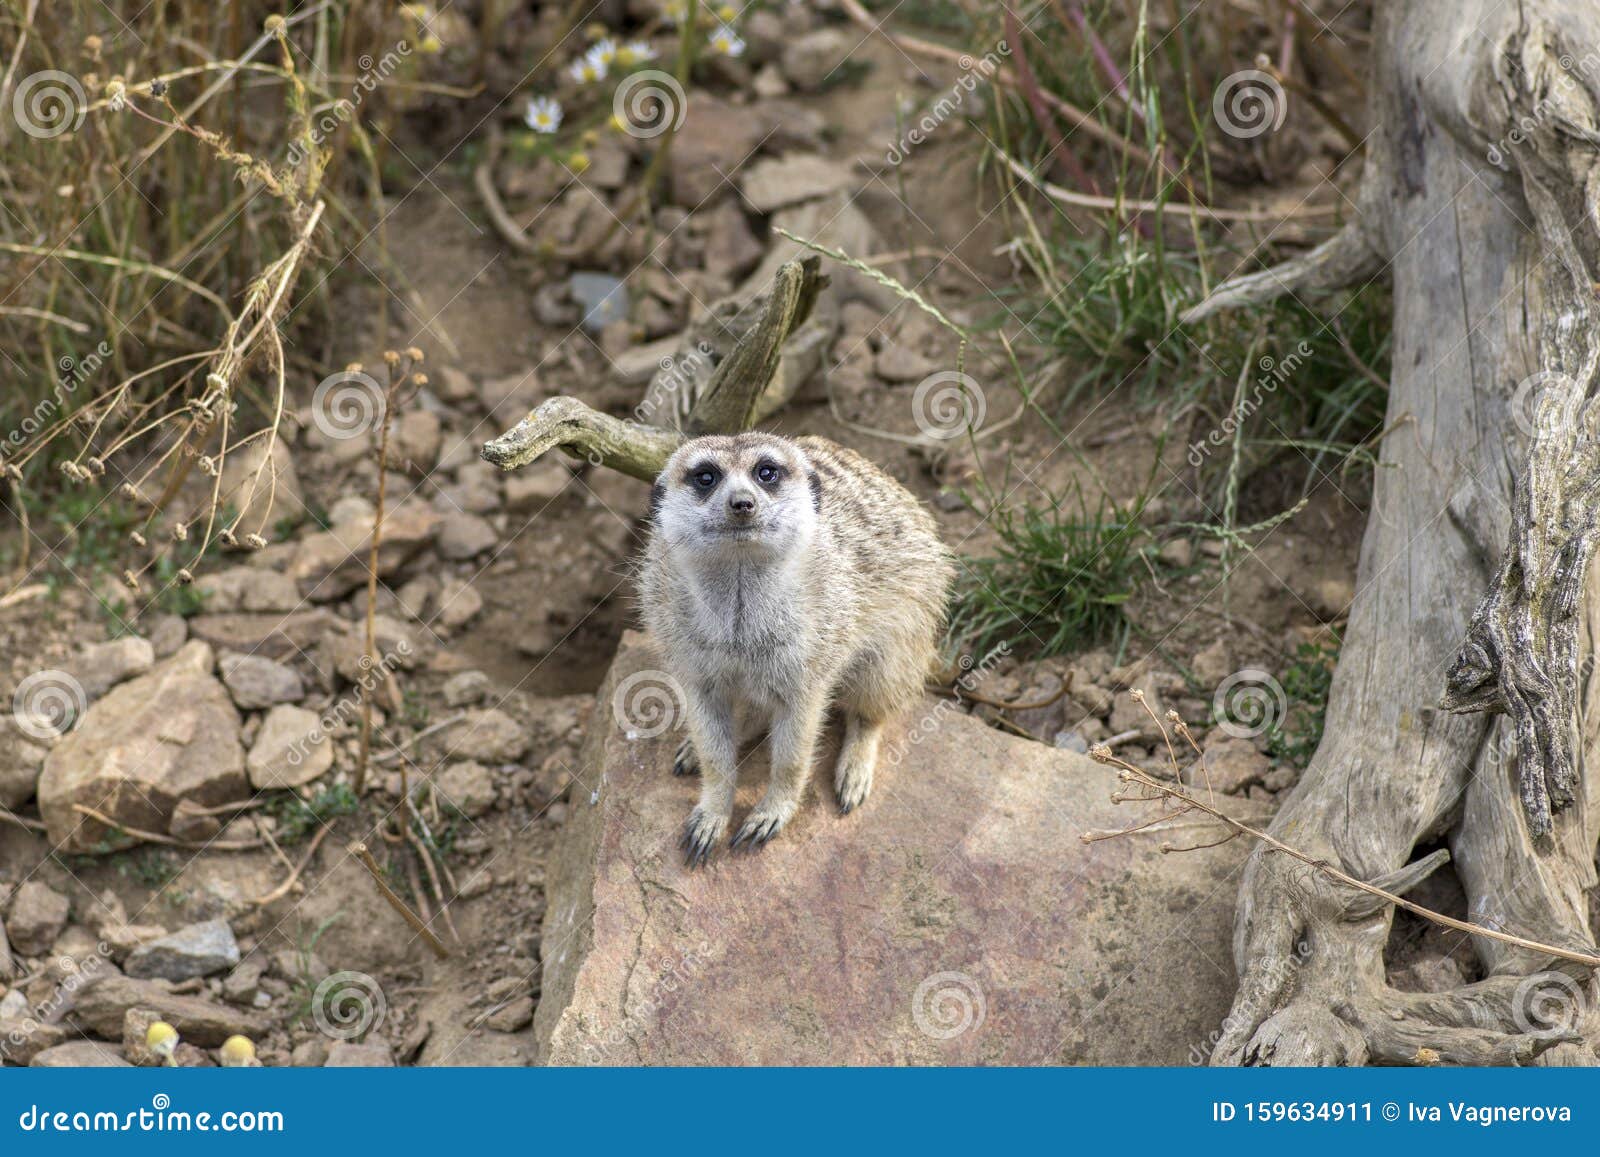 Beautiful Meerkat Watching in Sandy Area, Funny Small African Animal, Eye  Contact Stock Image - Image of closeup, joking: 159634911